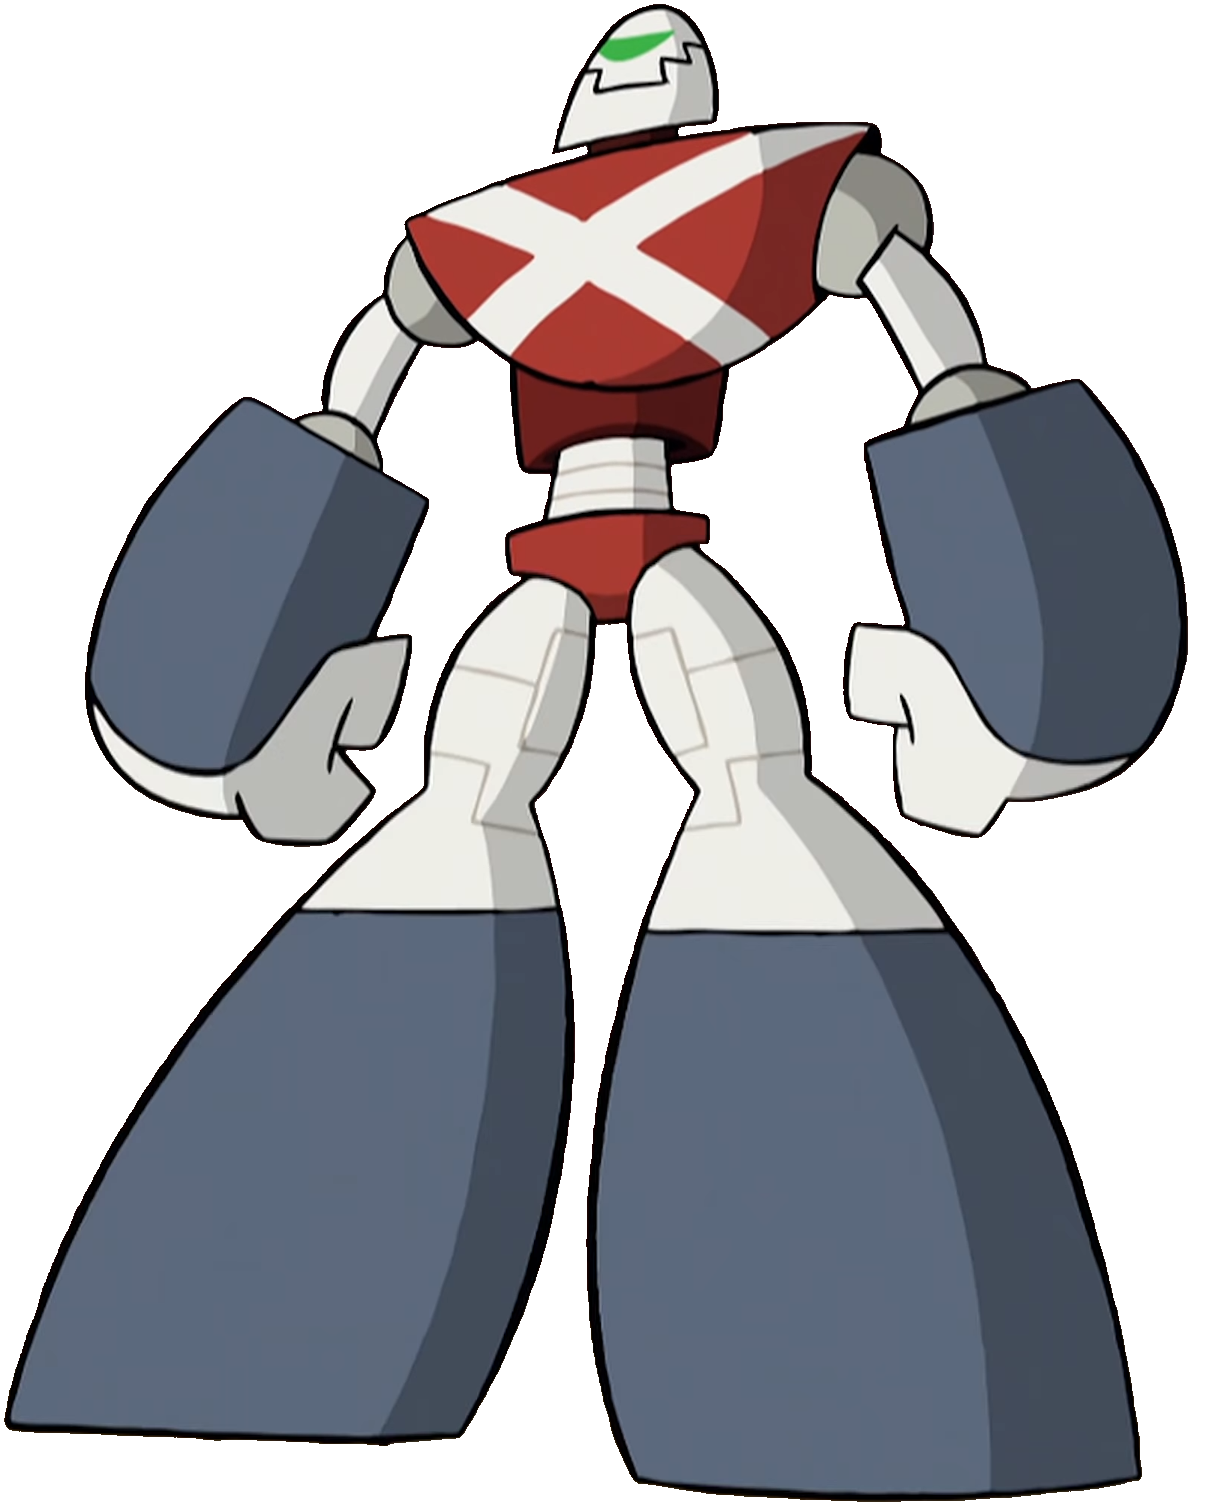 Robotman, Robotboy Wiki